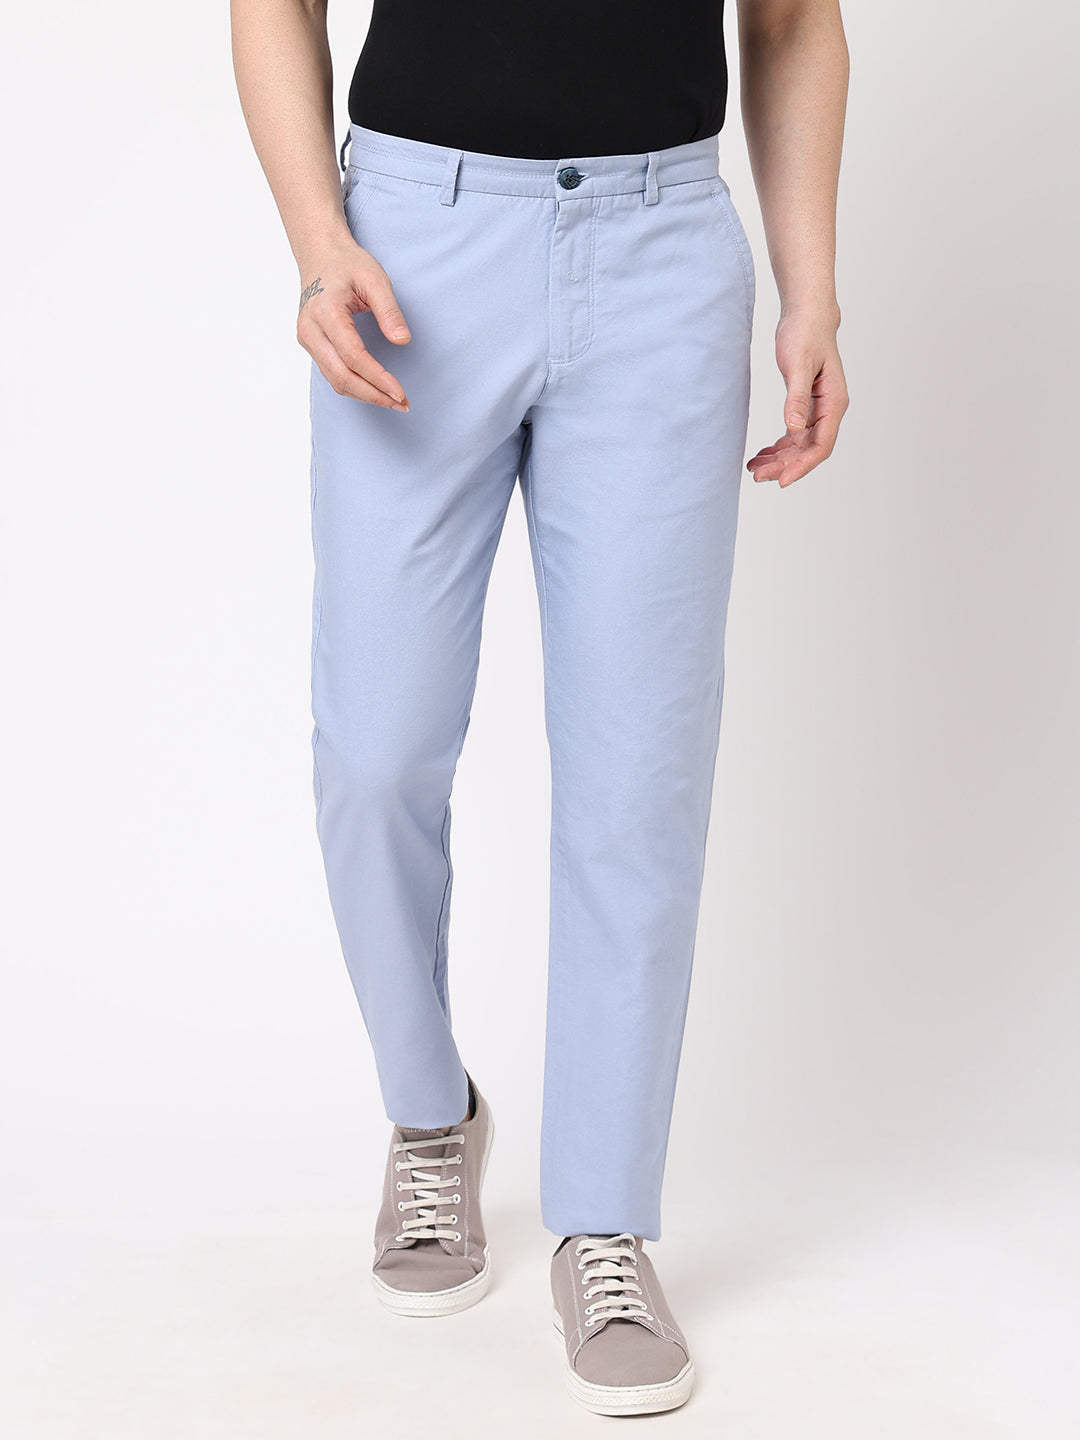 Buy Mens Cotton Lycra Casual Wear Slim Fit Pants